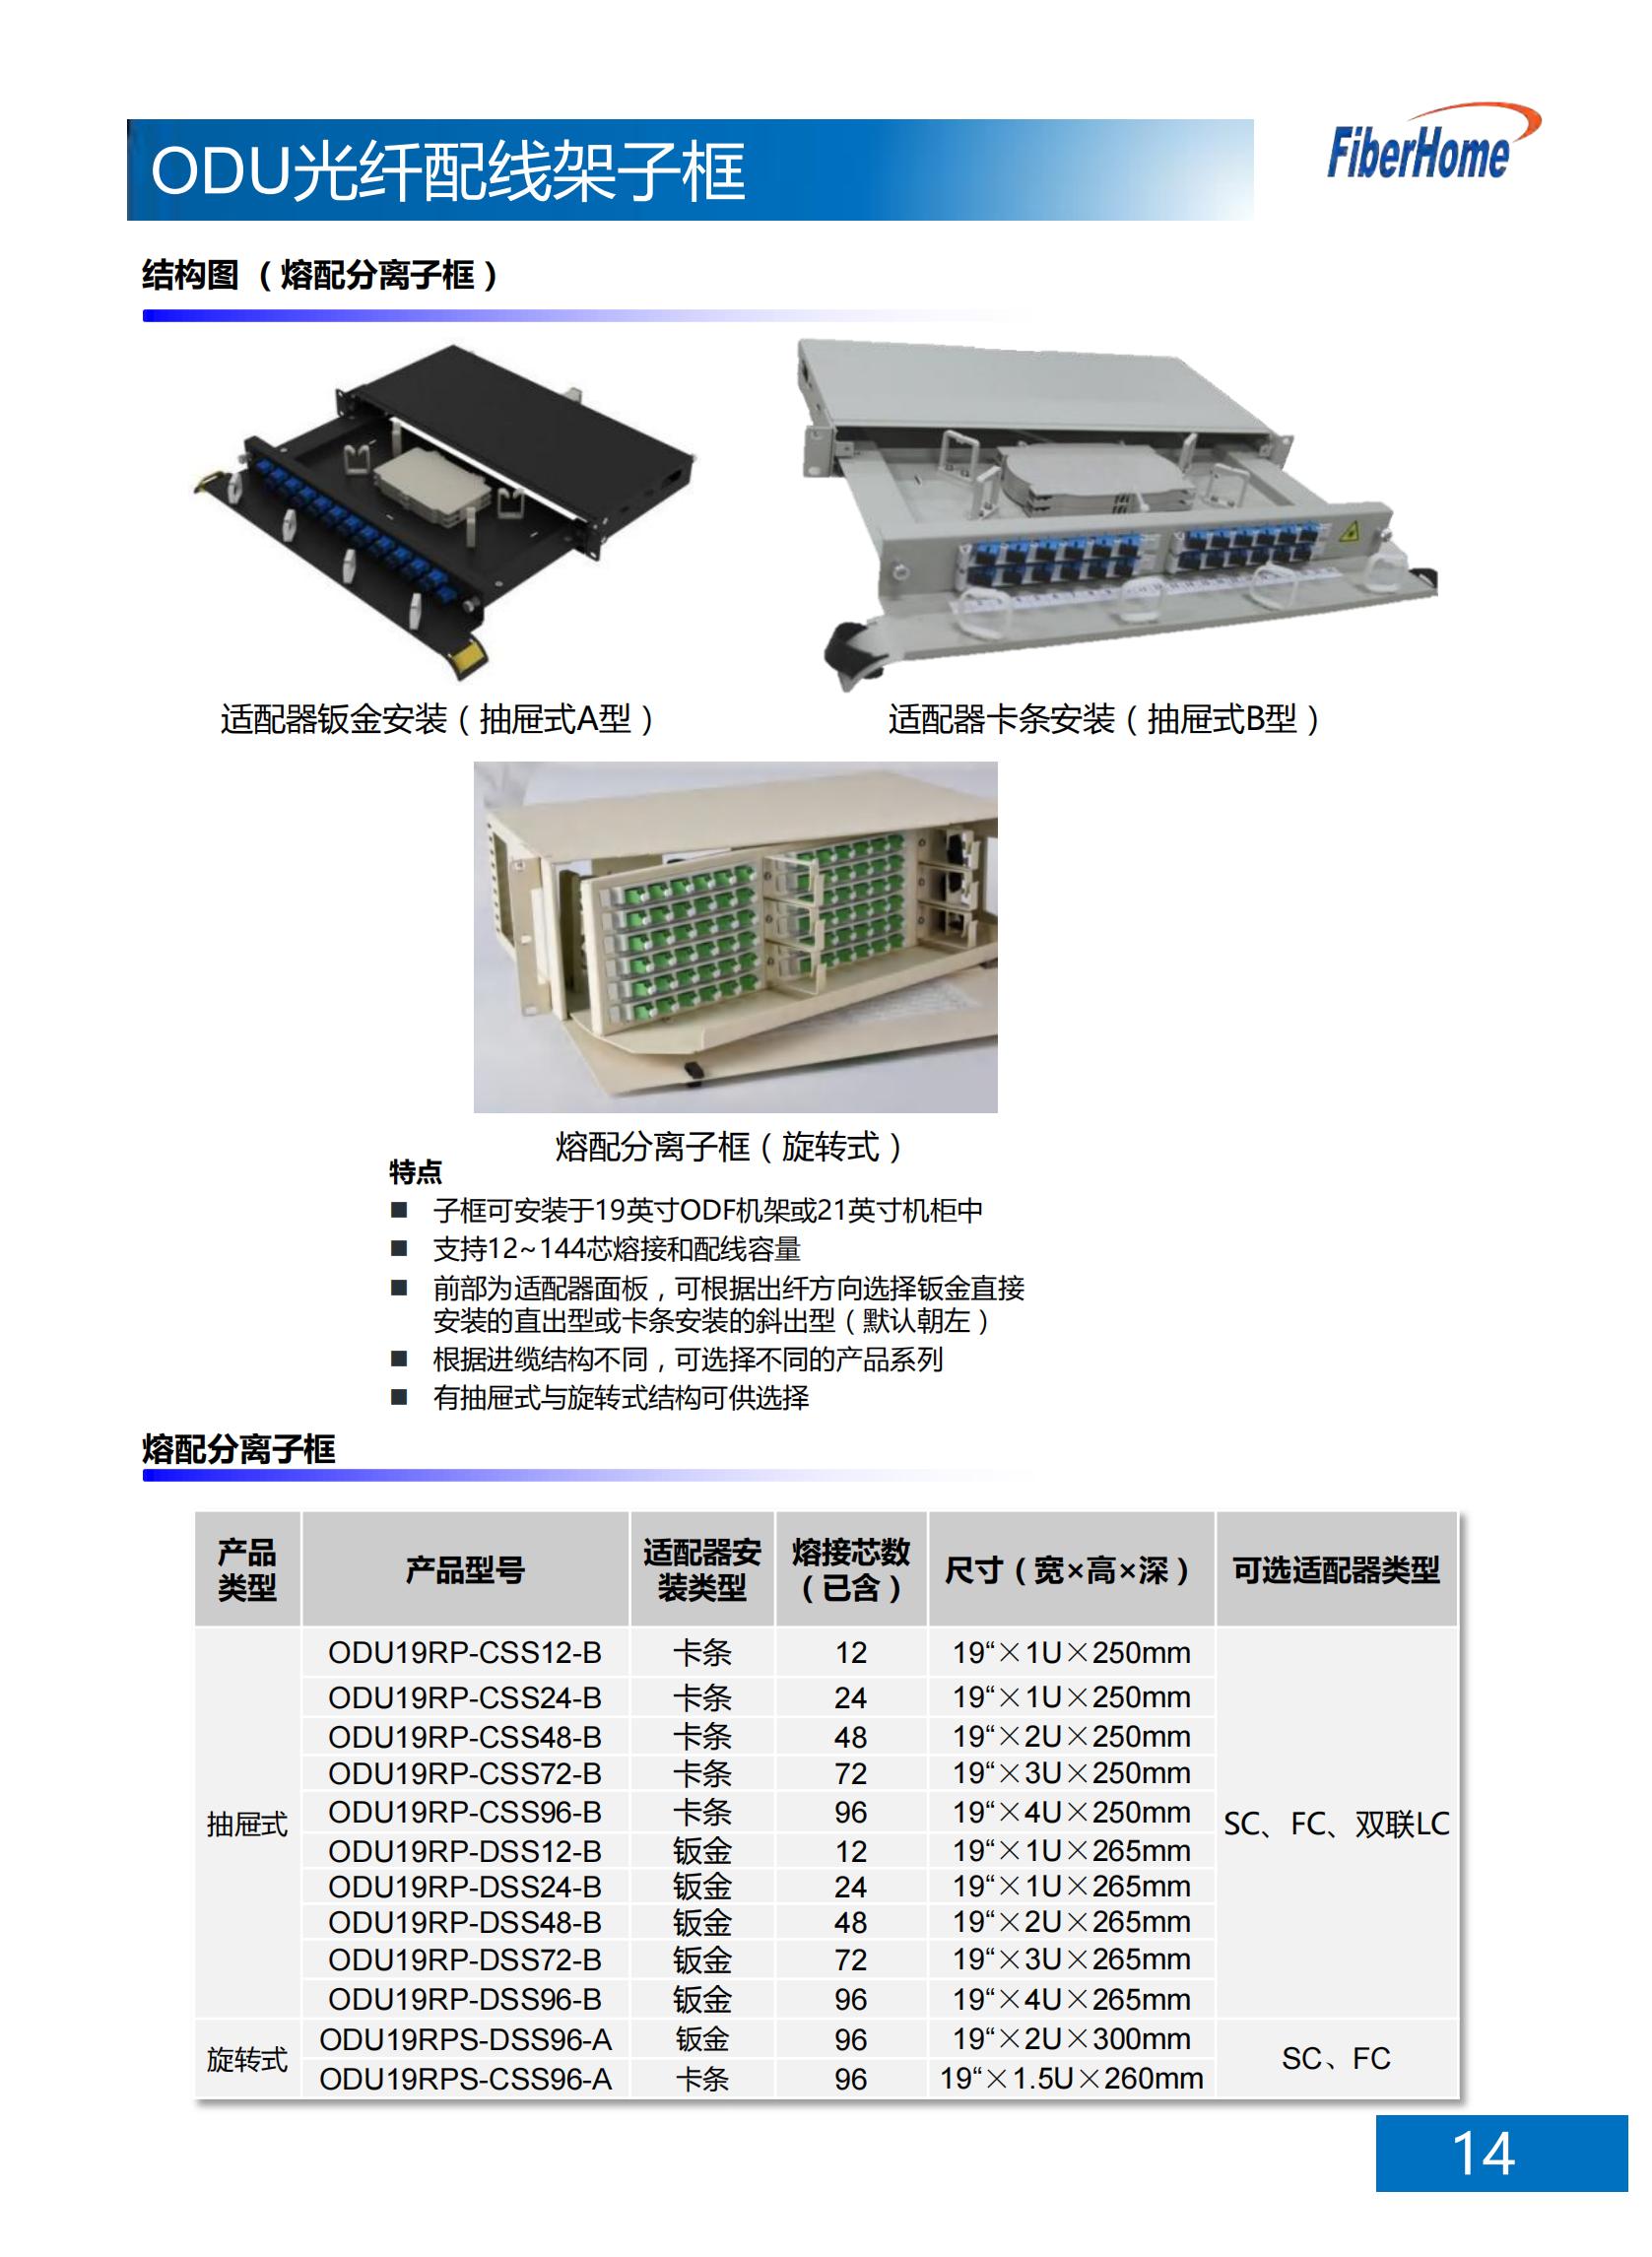 144-core ODU optical fiber distribution frame ODU19T-A1272-A-LC (including 24-core LC fusion integration unit*6)